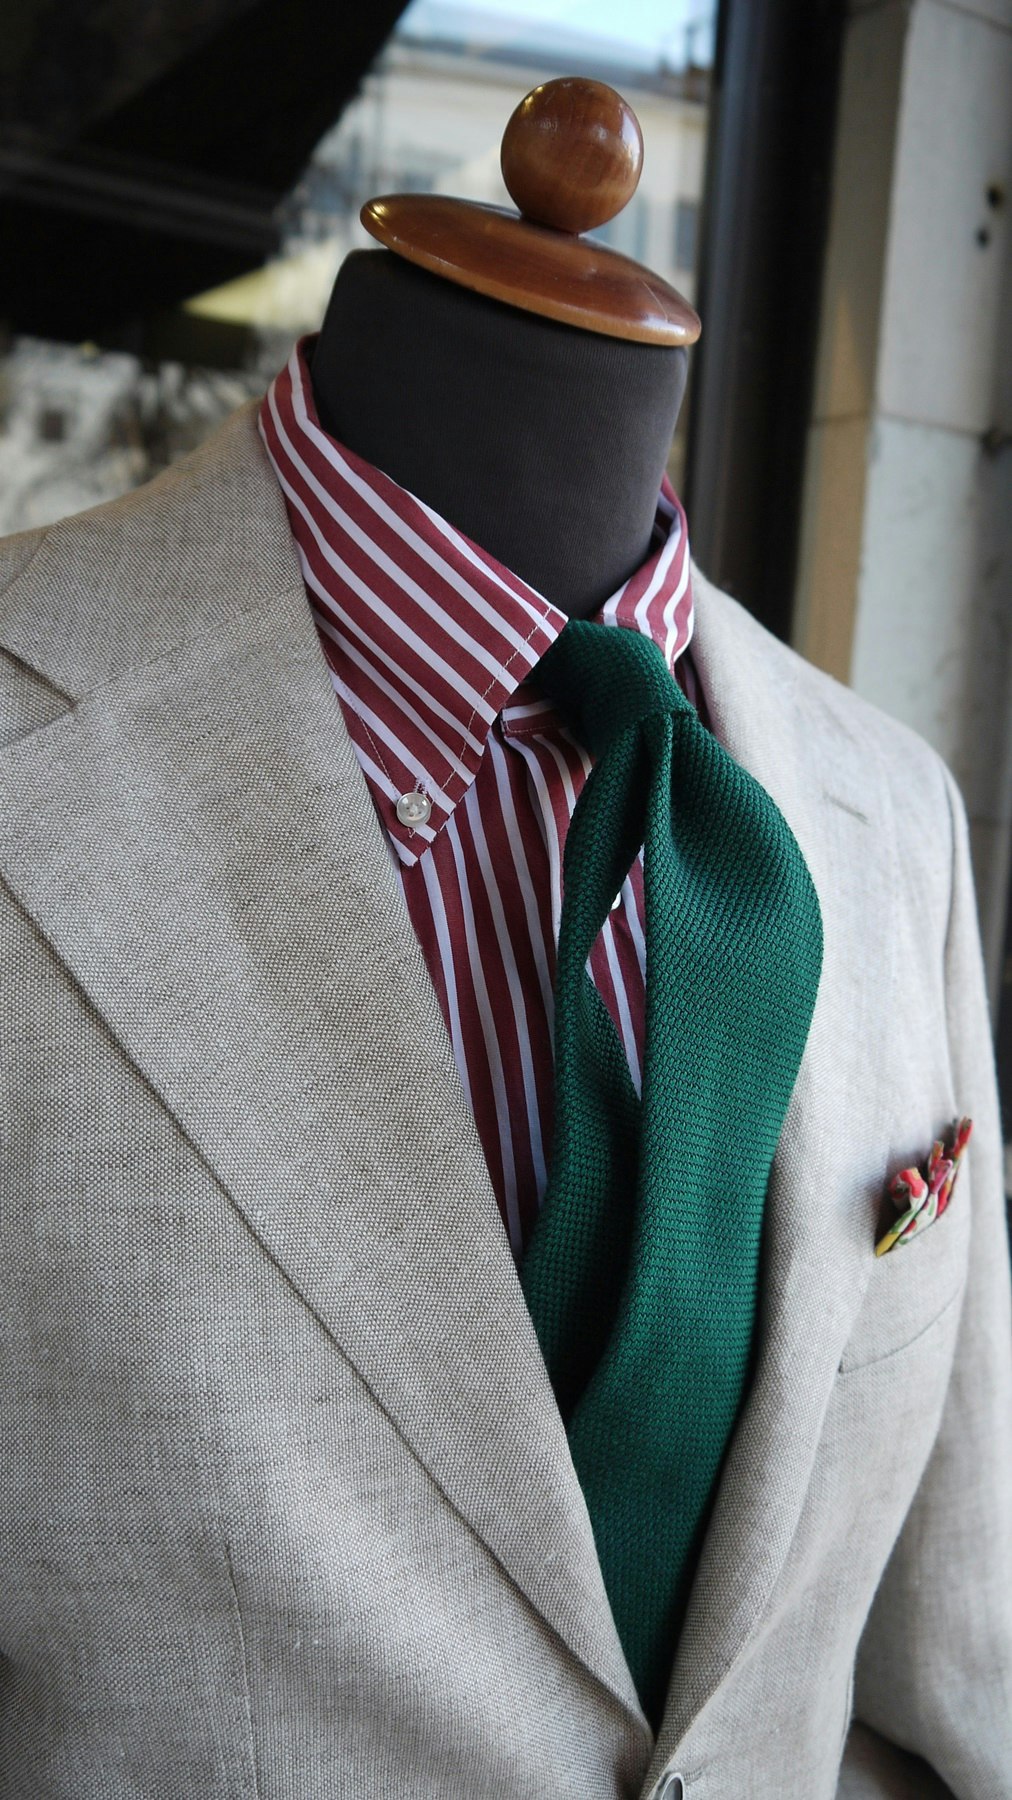 Pinstripe poplin shirt with button down collar and linen jacket